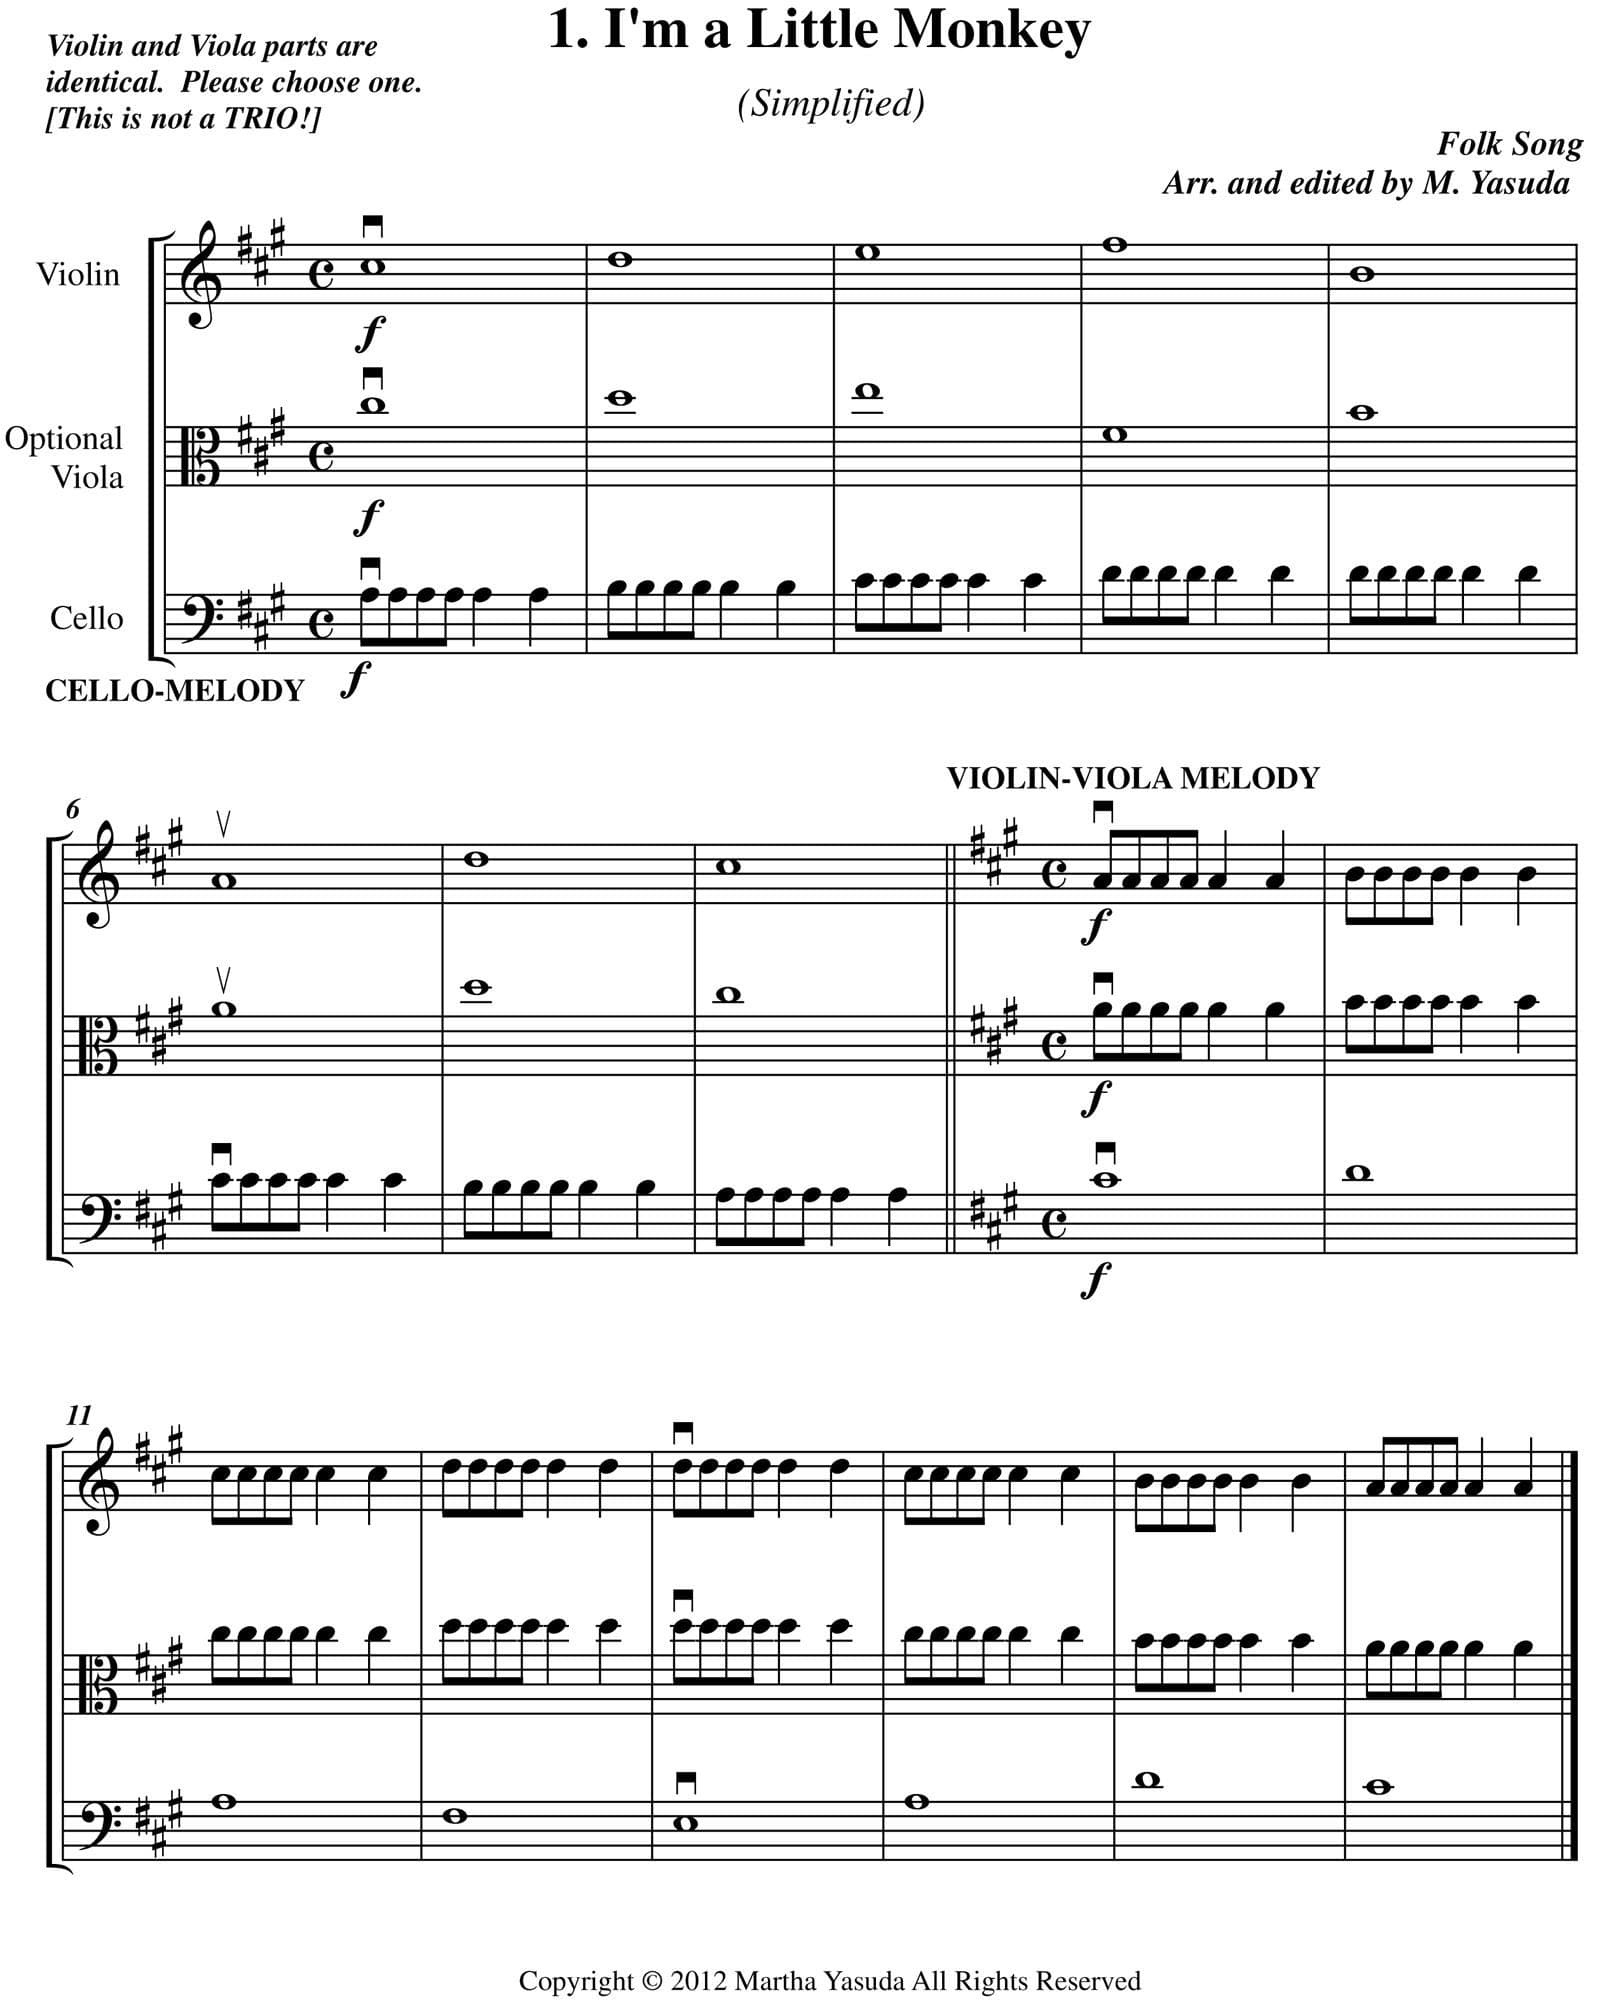 Yasuda, Martha - Flip-Flop Melodies For Cello and Violin, Volume I, 2nd Edition - Digital Download